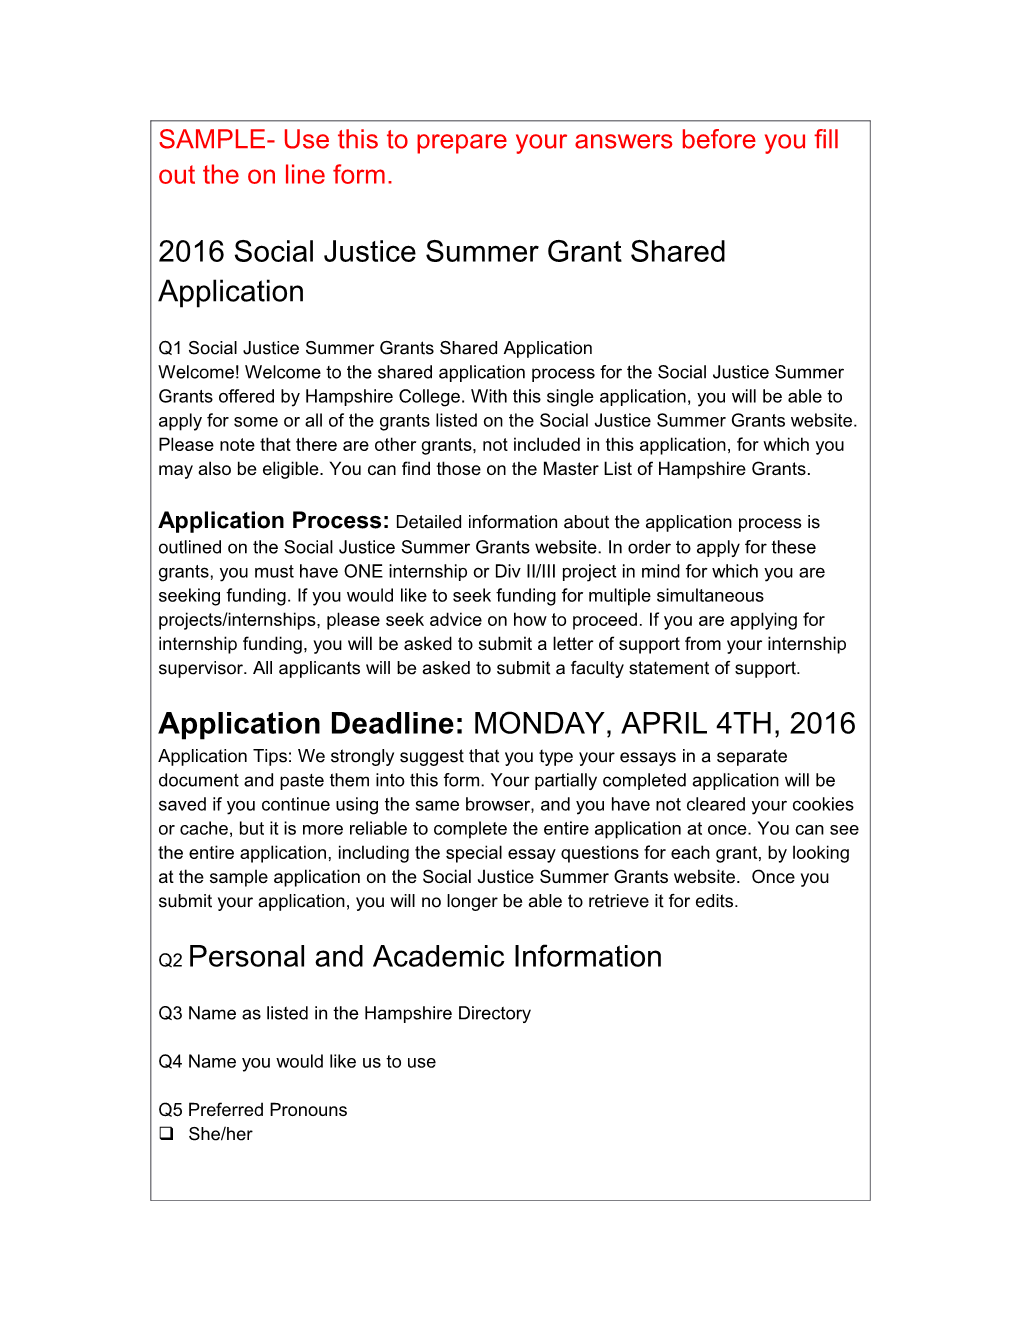 2016 Social Justice Summer Grant Shared Application